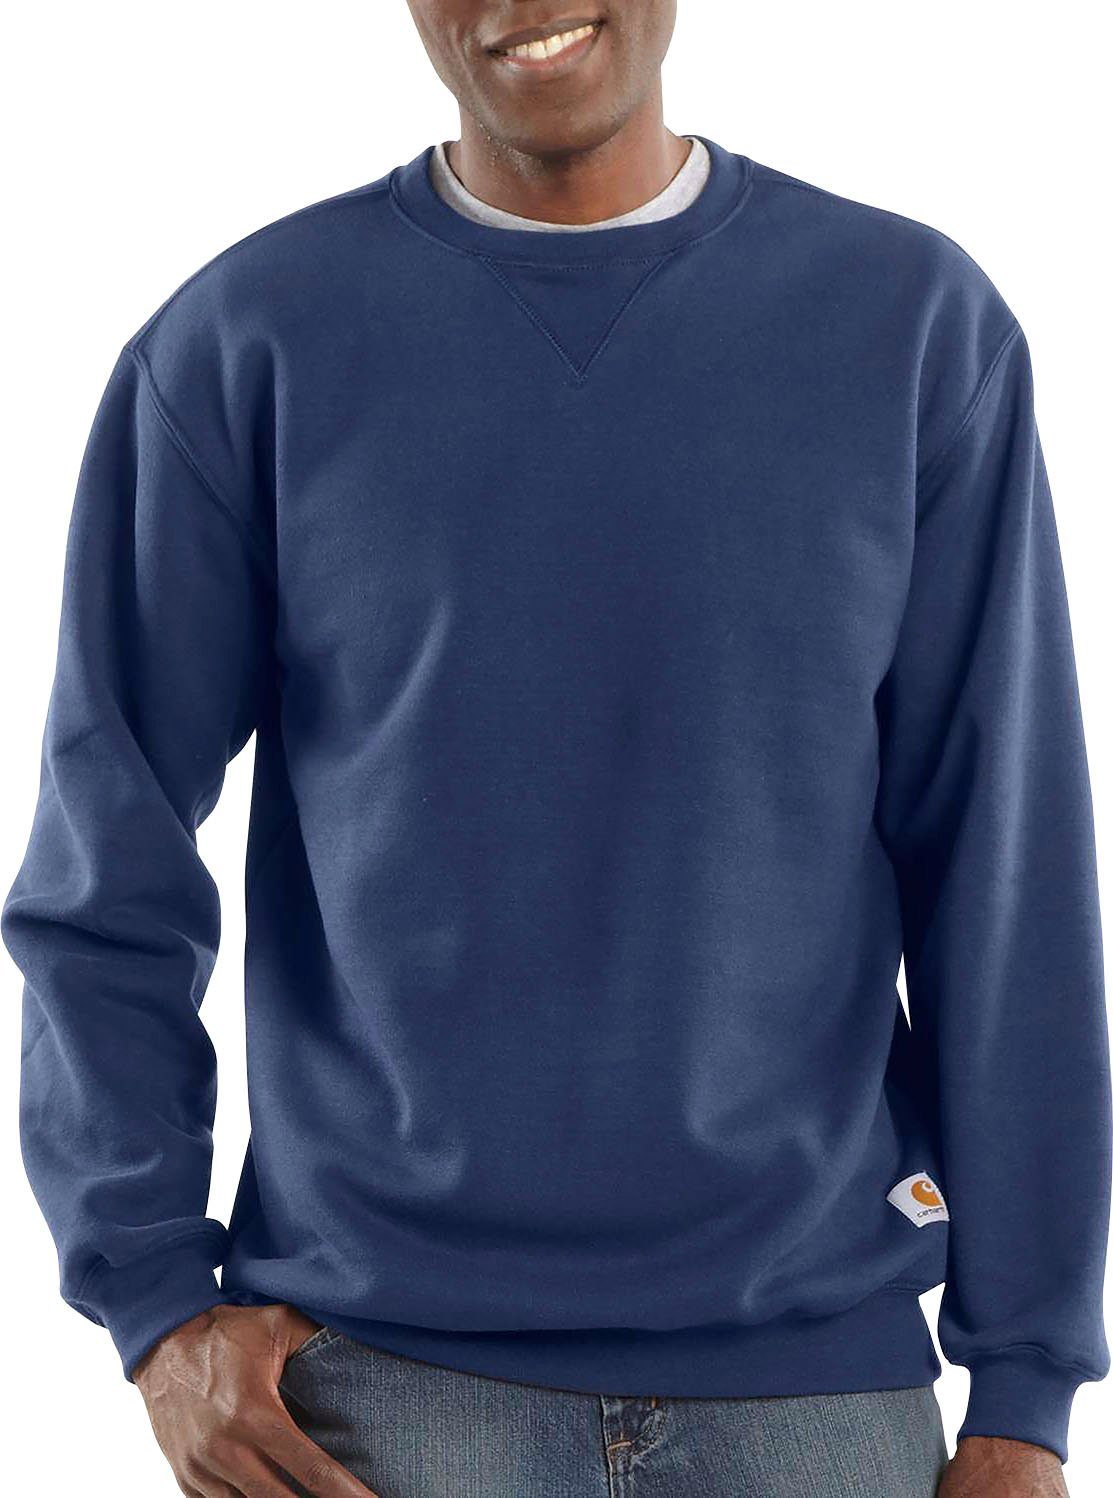 Carhartt K124 navy Sweatshirt